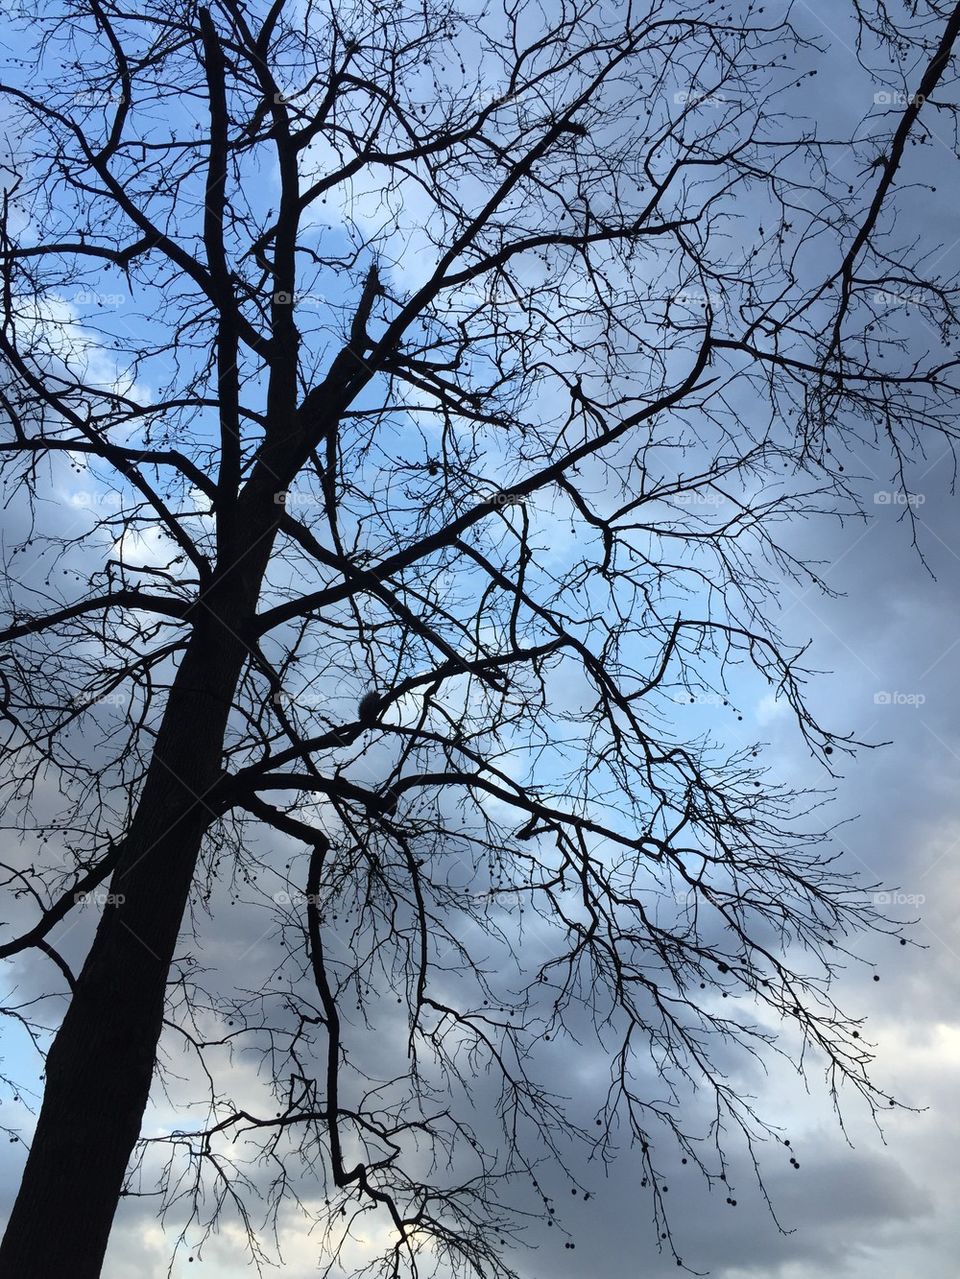 Sky and tree 